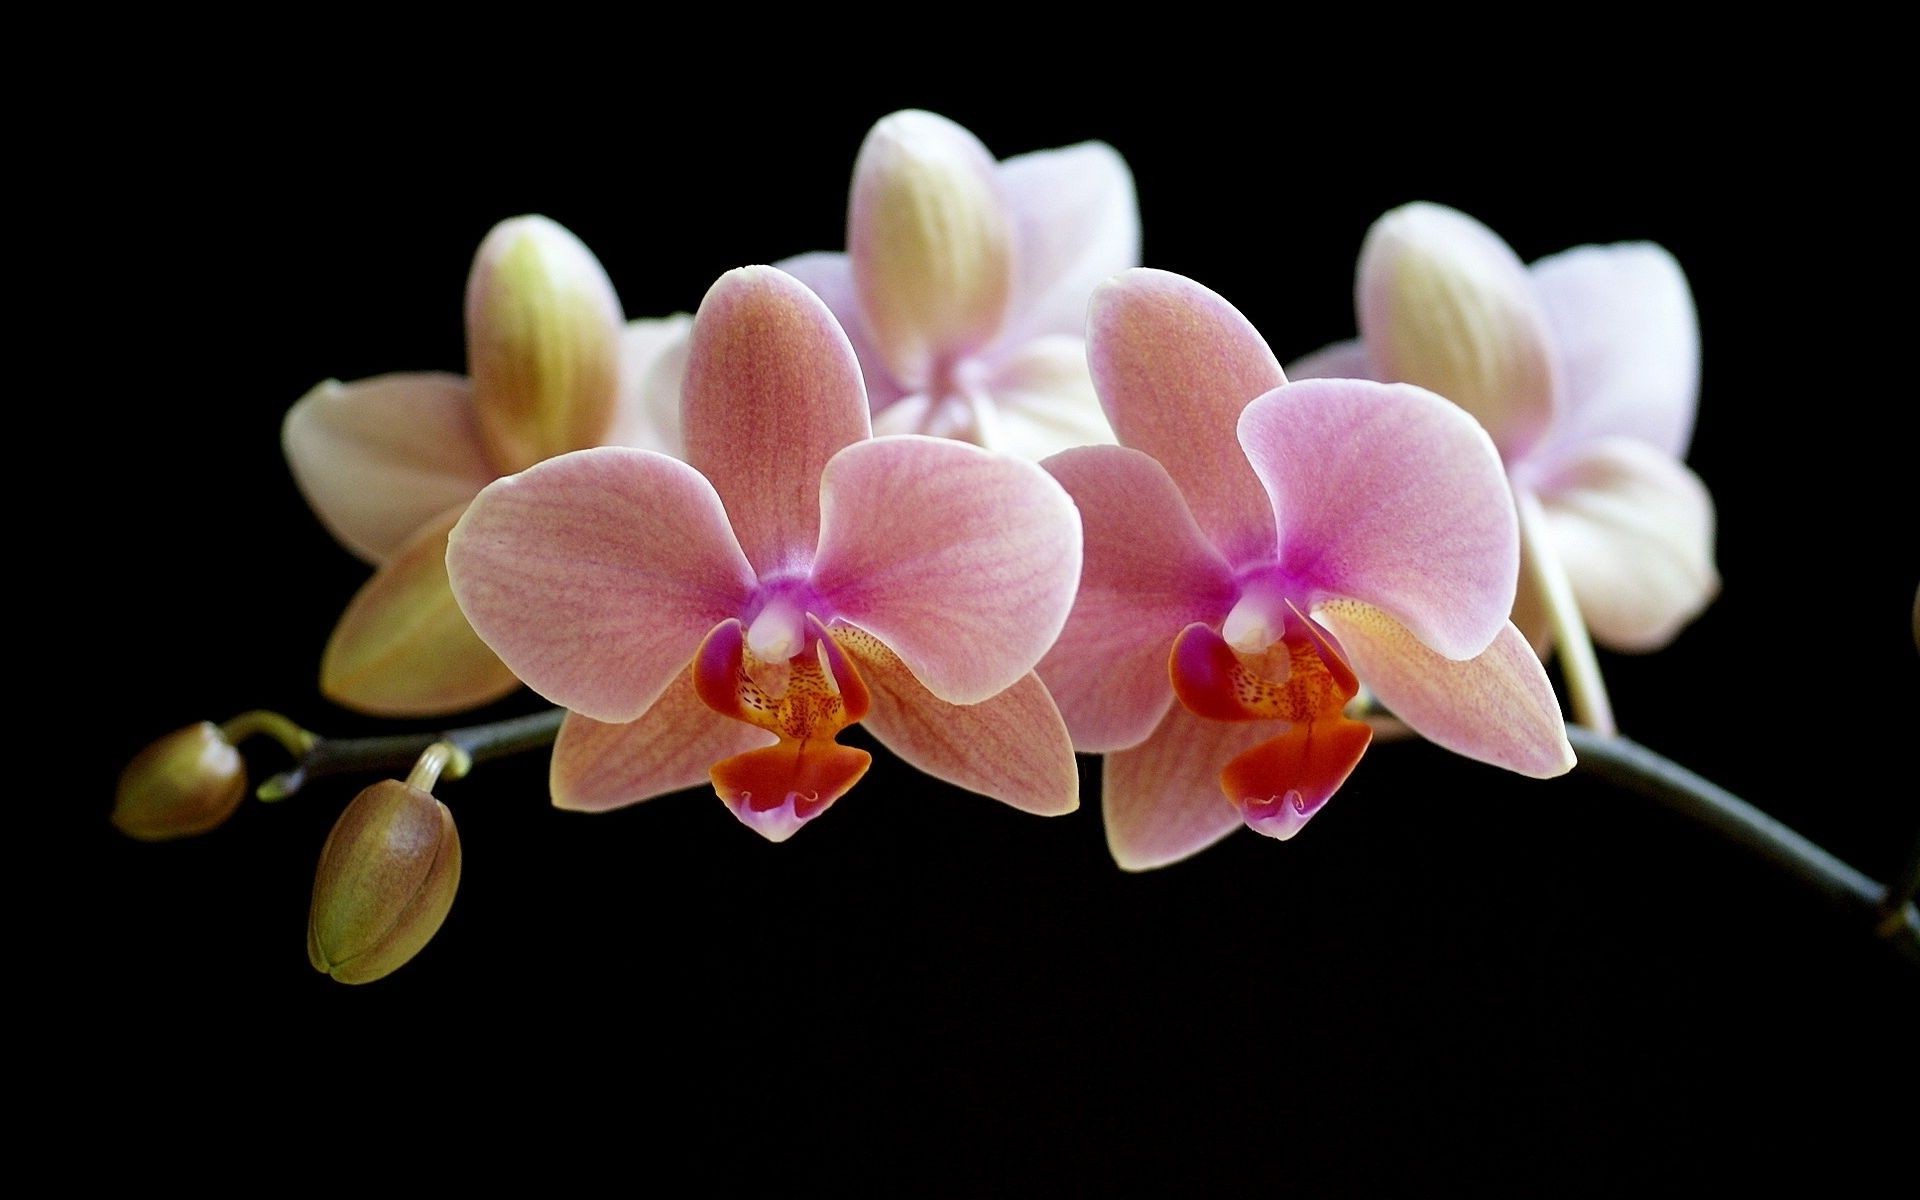 flowers flower flora nature phalaenopsis tropical orchids exotic blooming petal beautiful elegant floral romantic romance husk botanical color branch delicate